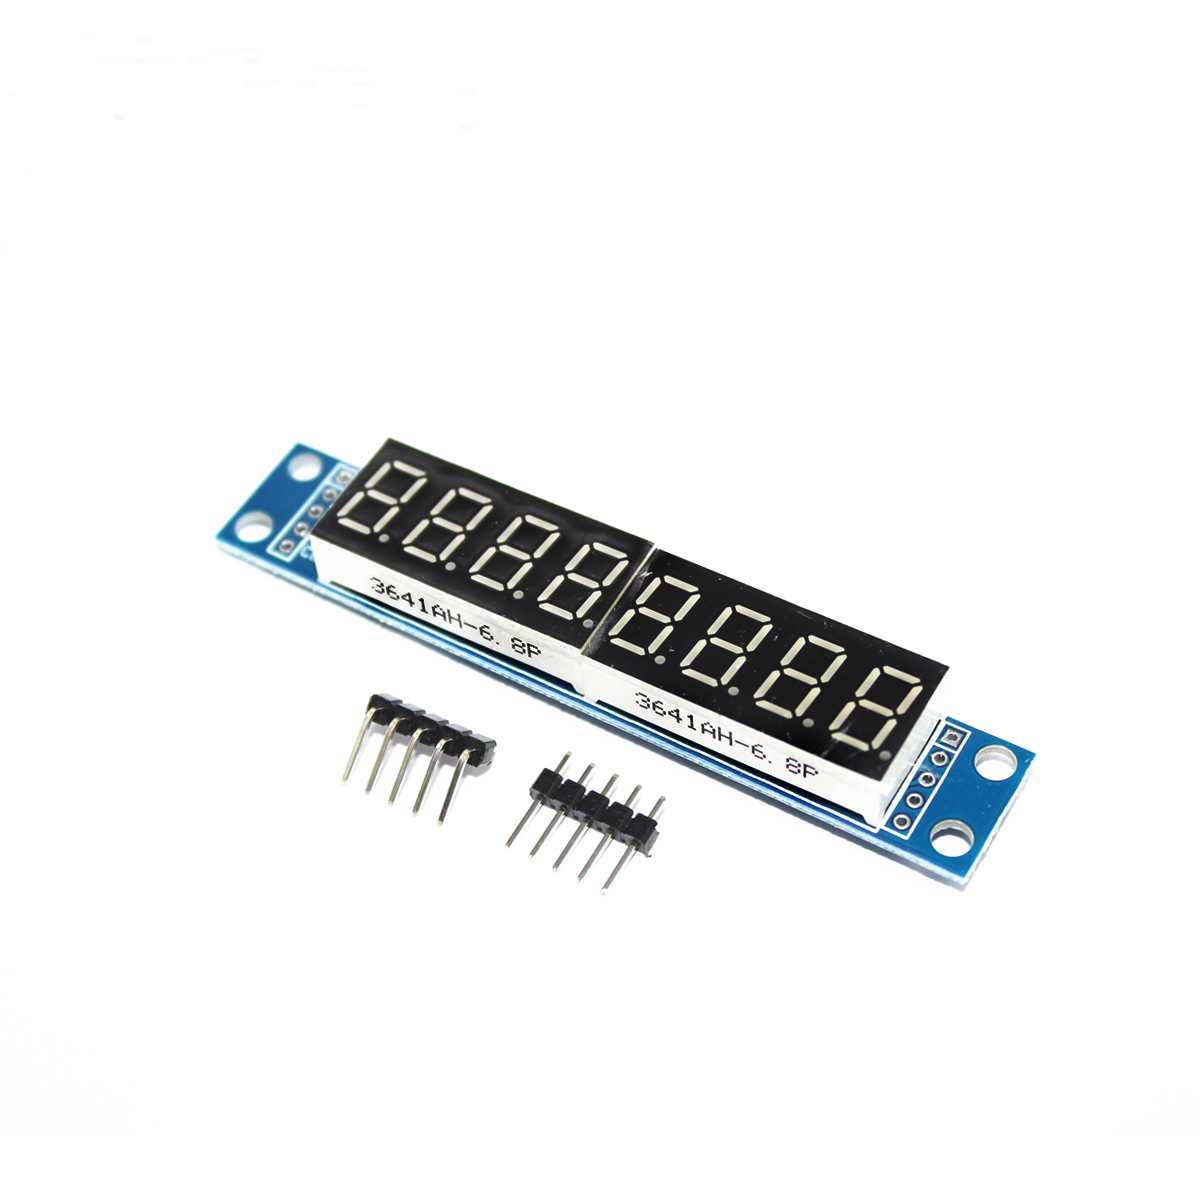 MAX7219 LED Dot Matrix Display Module 8 Digital Tube Display Control Board For Arduino Microcontroller Serial Driver 7 Segment